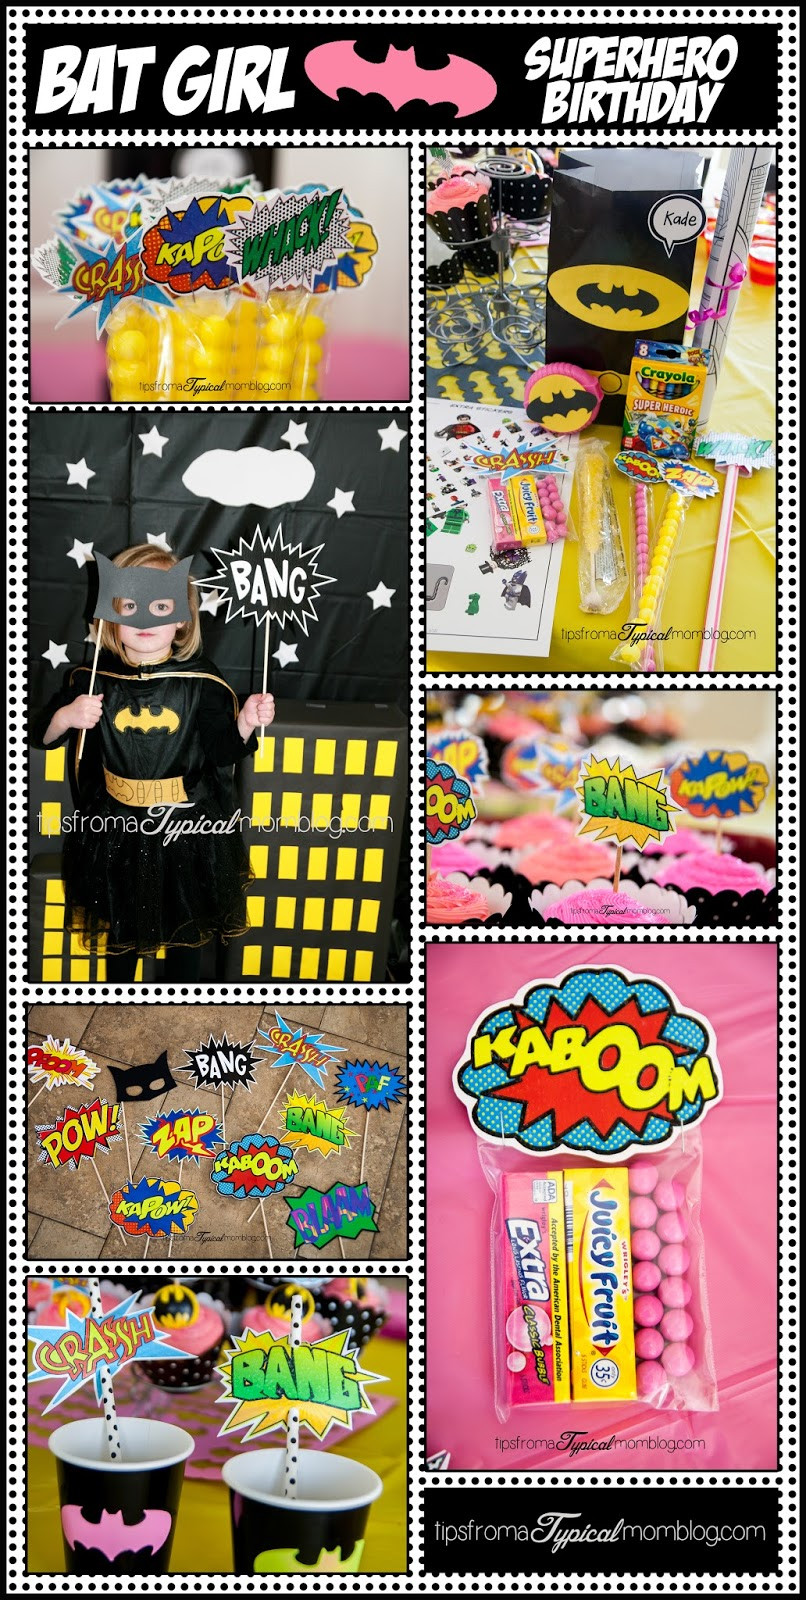 Superhero Girl Birthday Party Ideas
 Superhero Girl Birthday Party Ideas and Free Printables